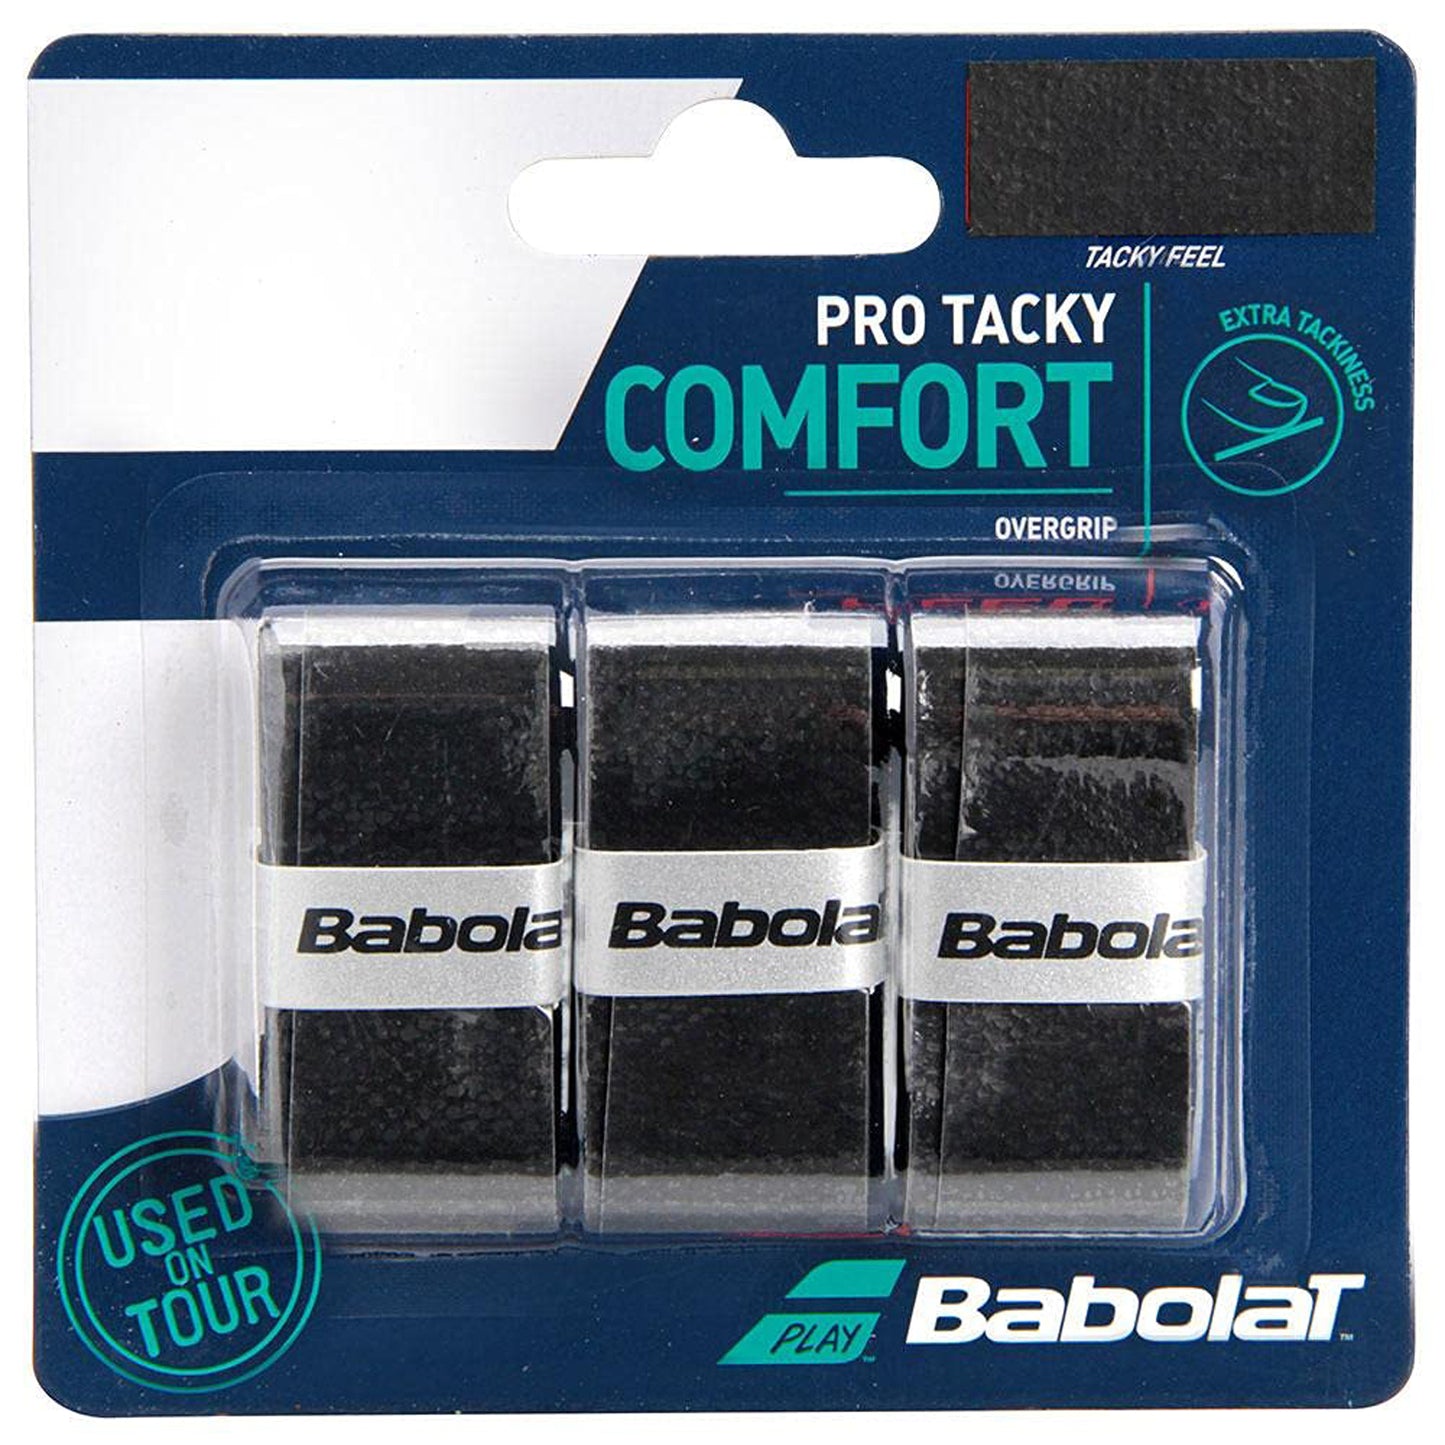 Babolat 653039-105 Pro Tacky X3 Tennis Grip Pack of 3 -Black - Best Price online Prokicksports.com